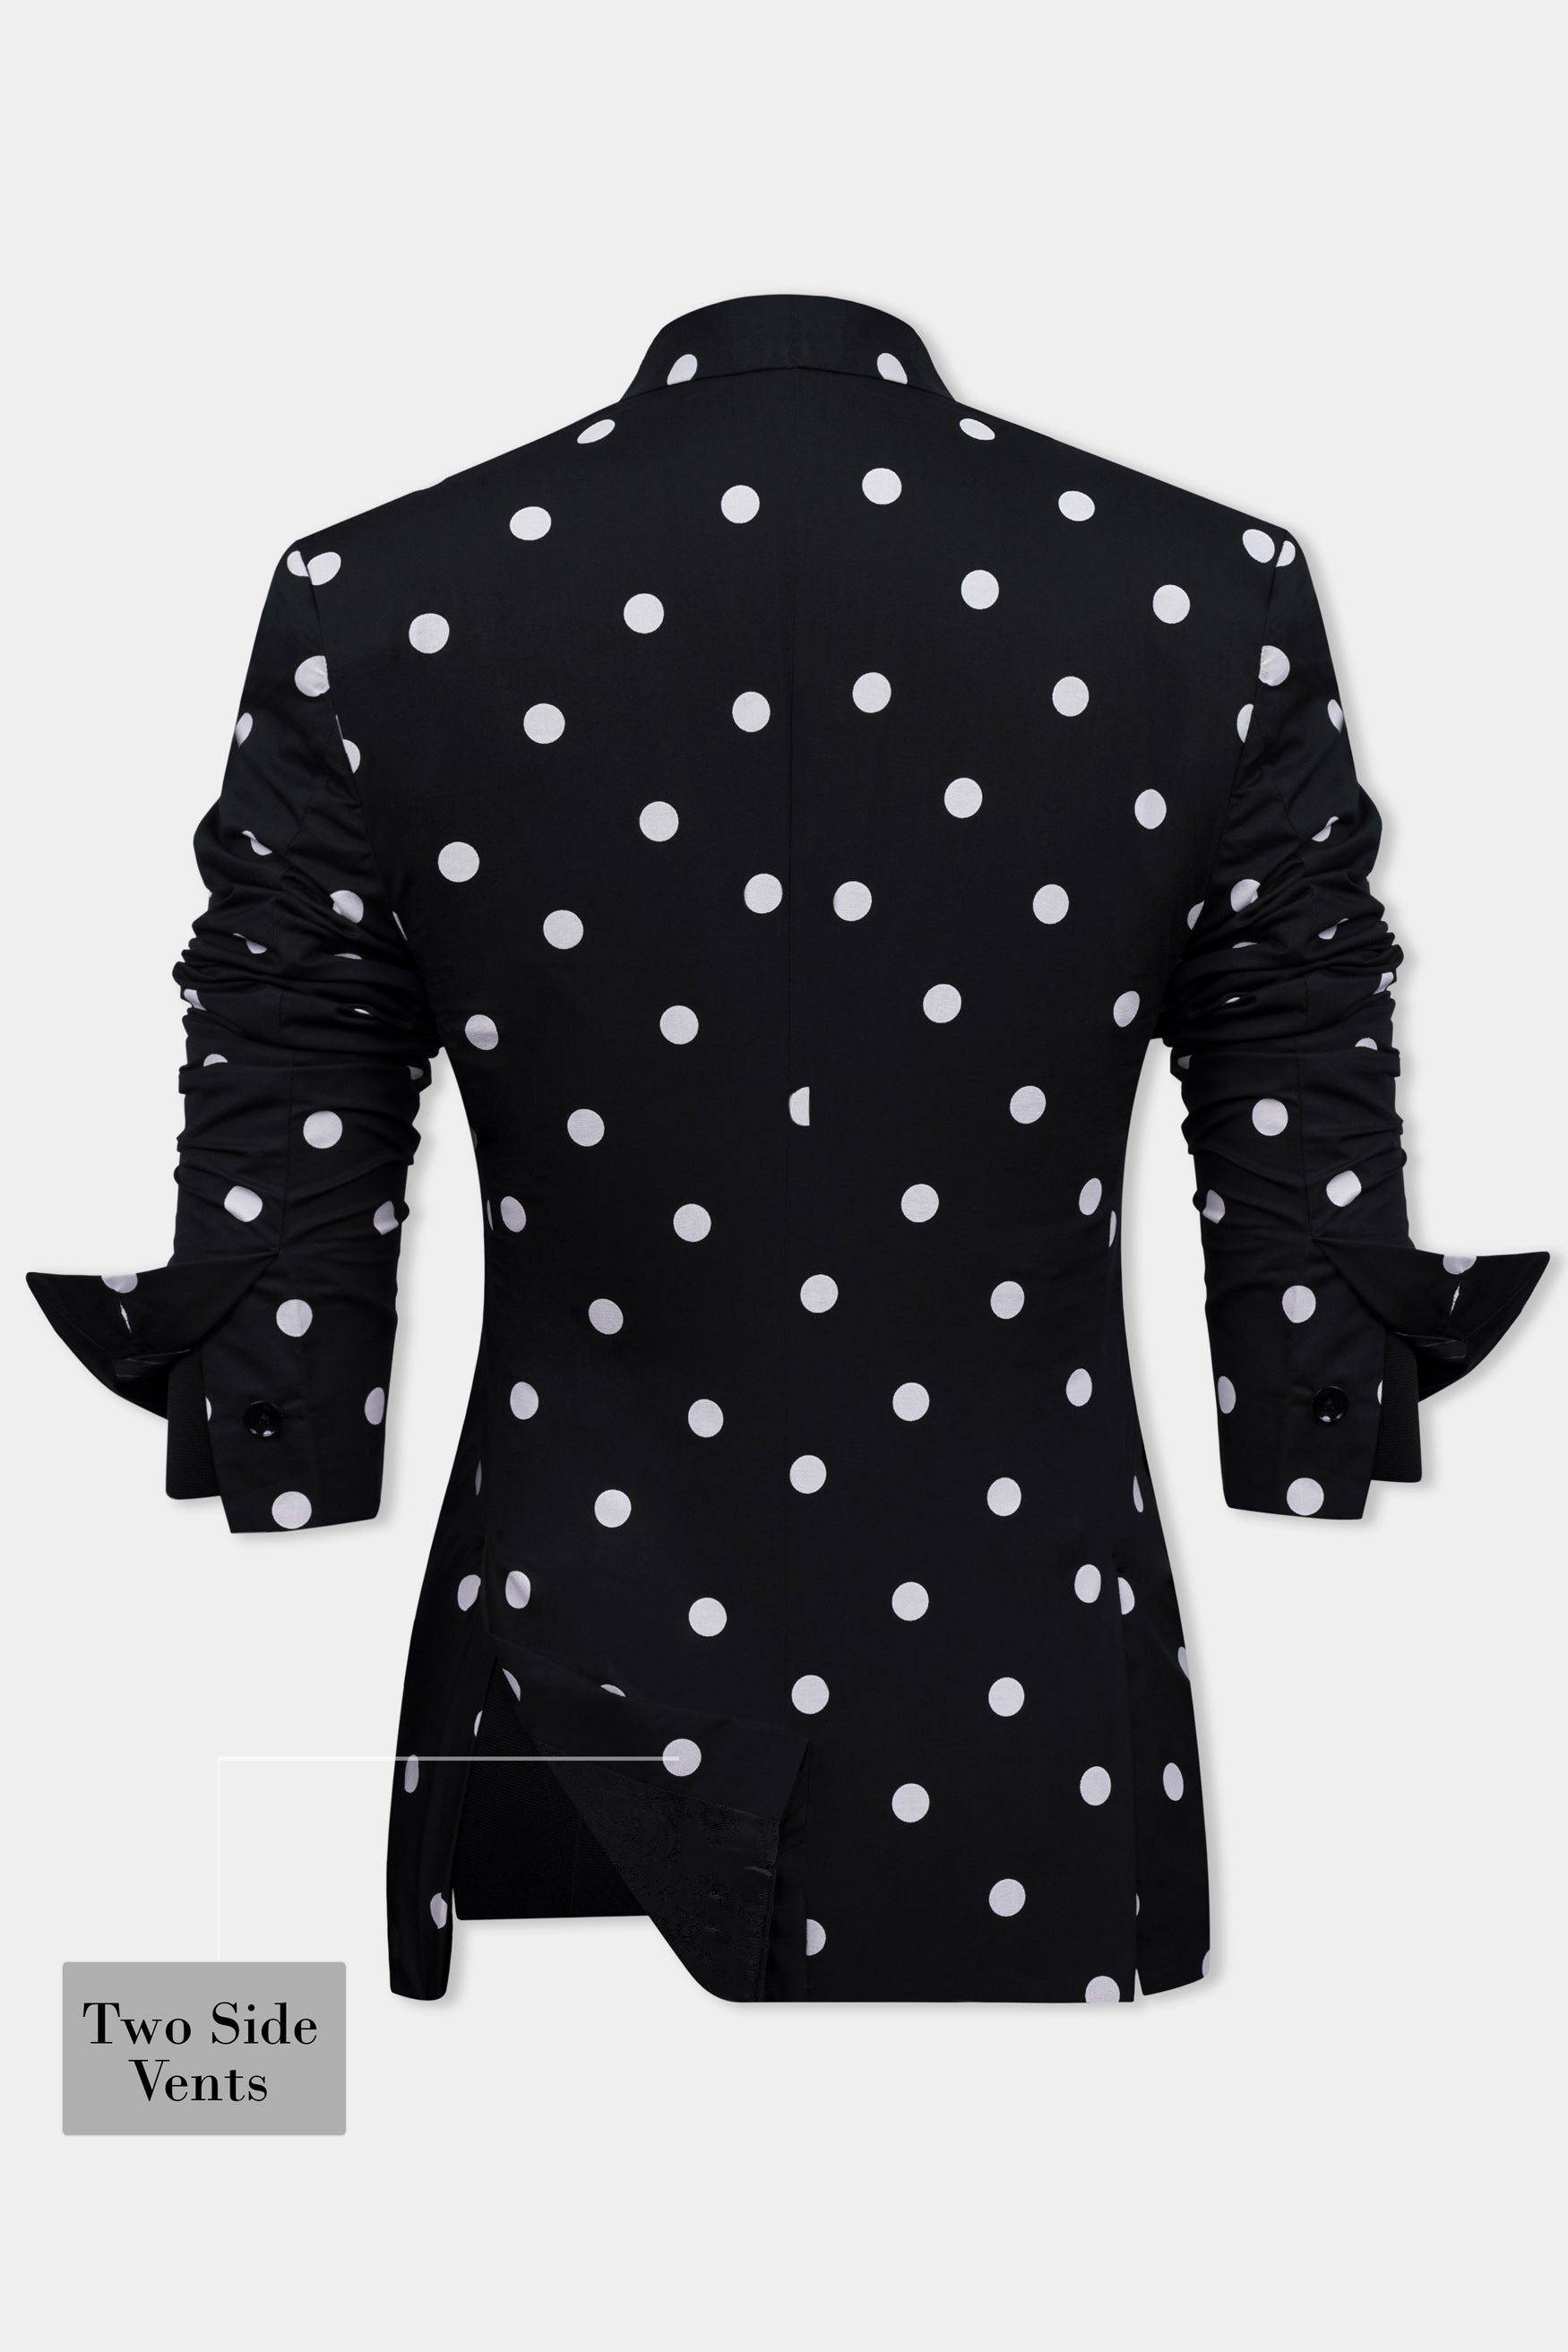 Jade Black and Bright White Polka Dotted Premium Cotton Women’s Tuxedo Suit